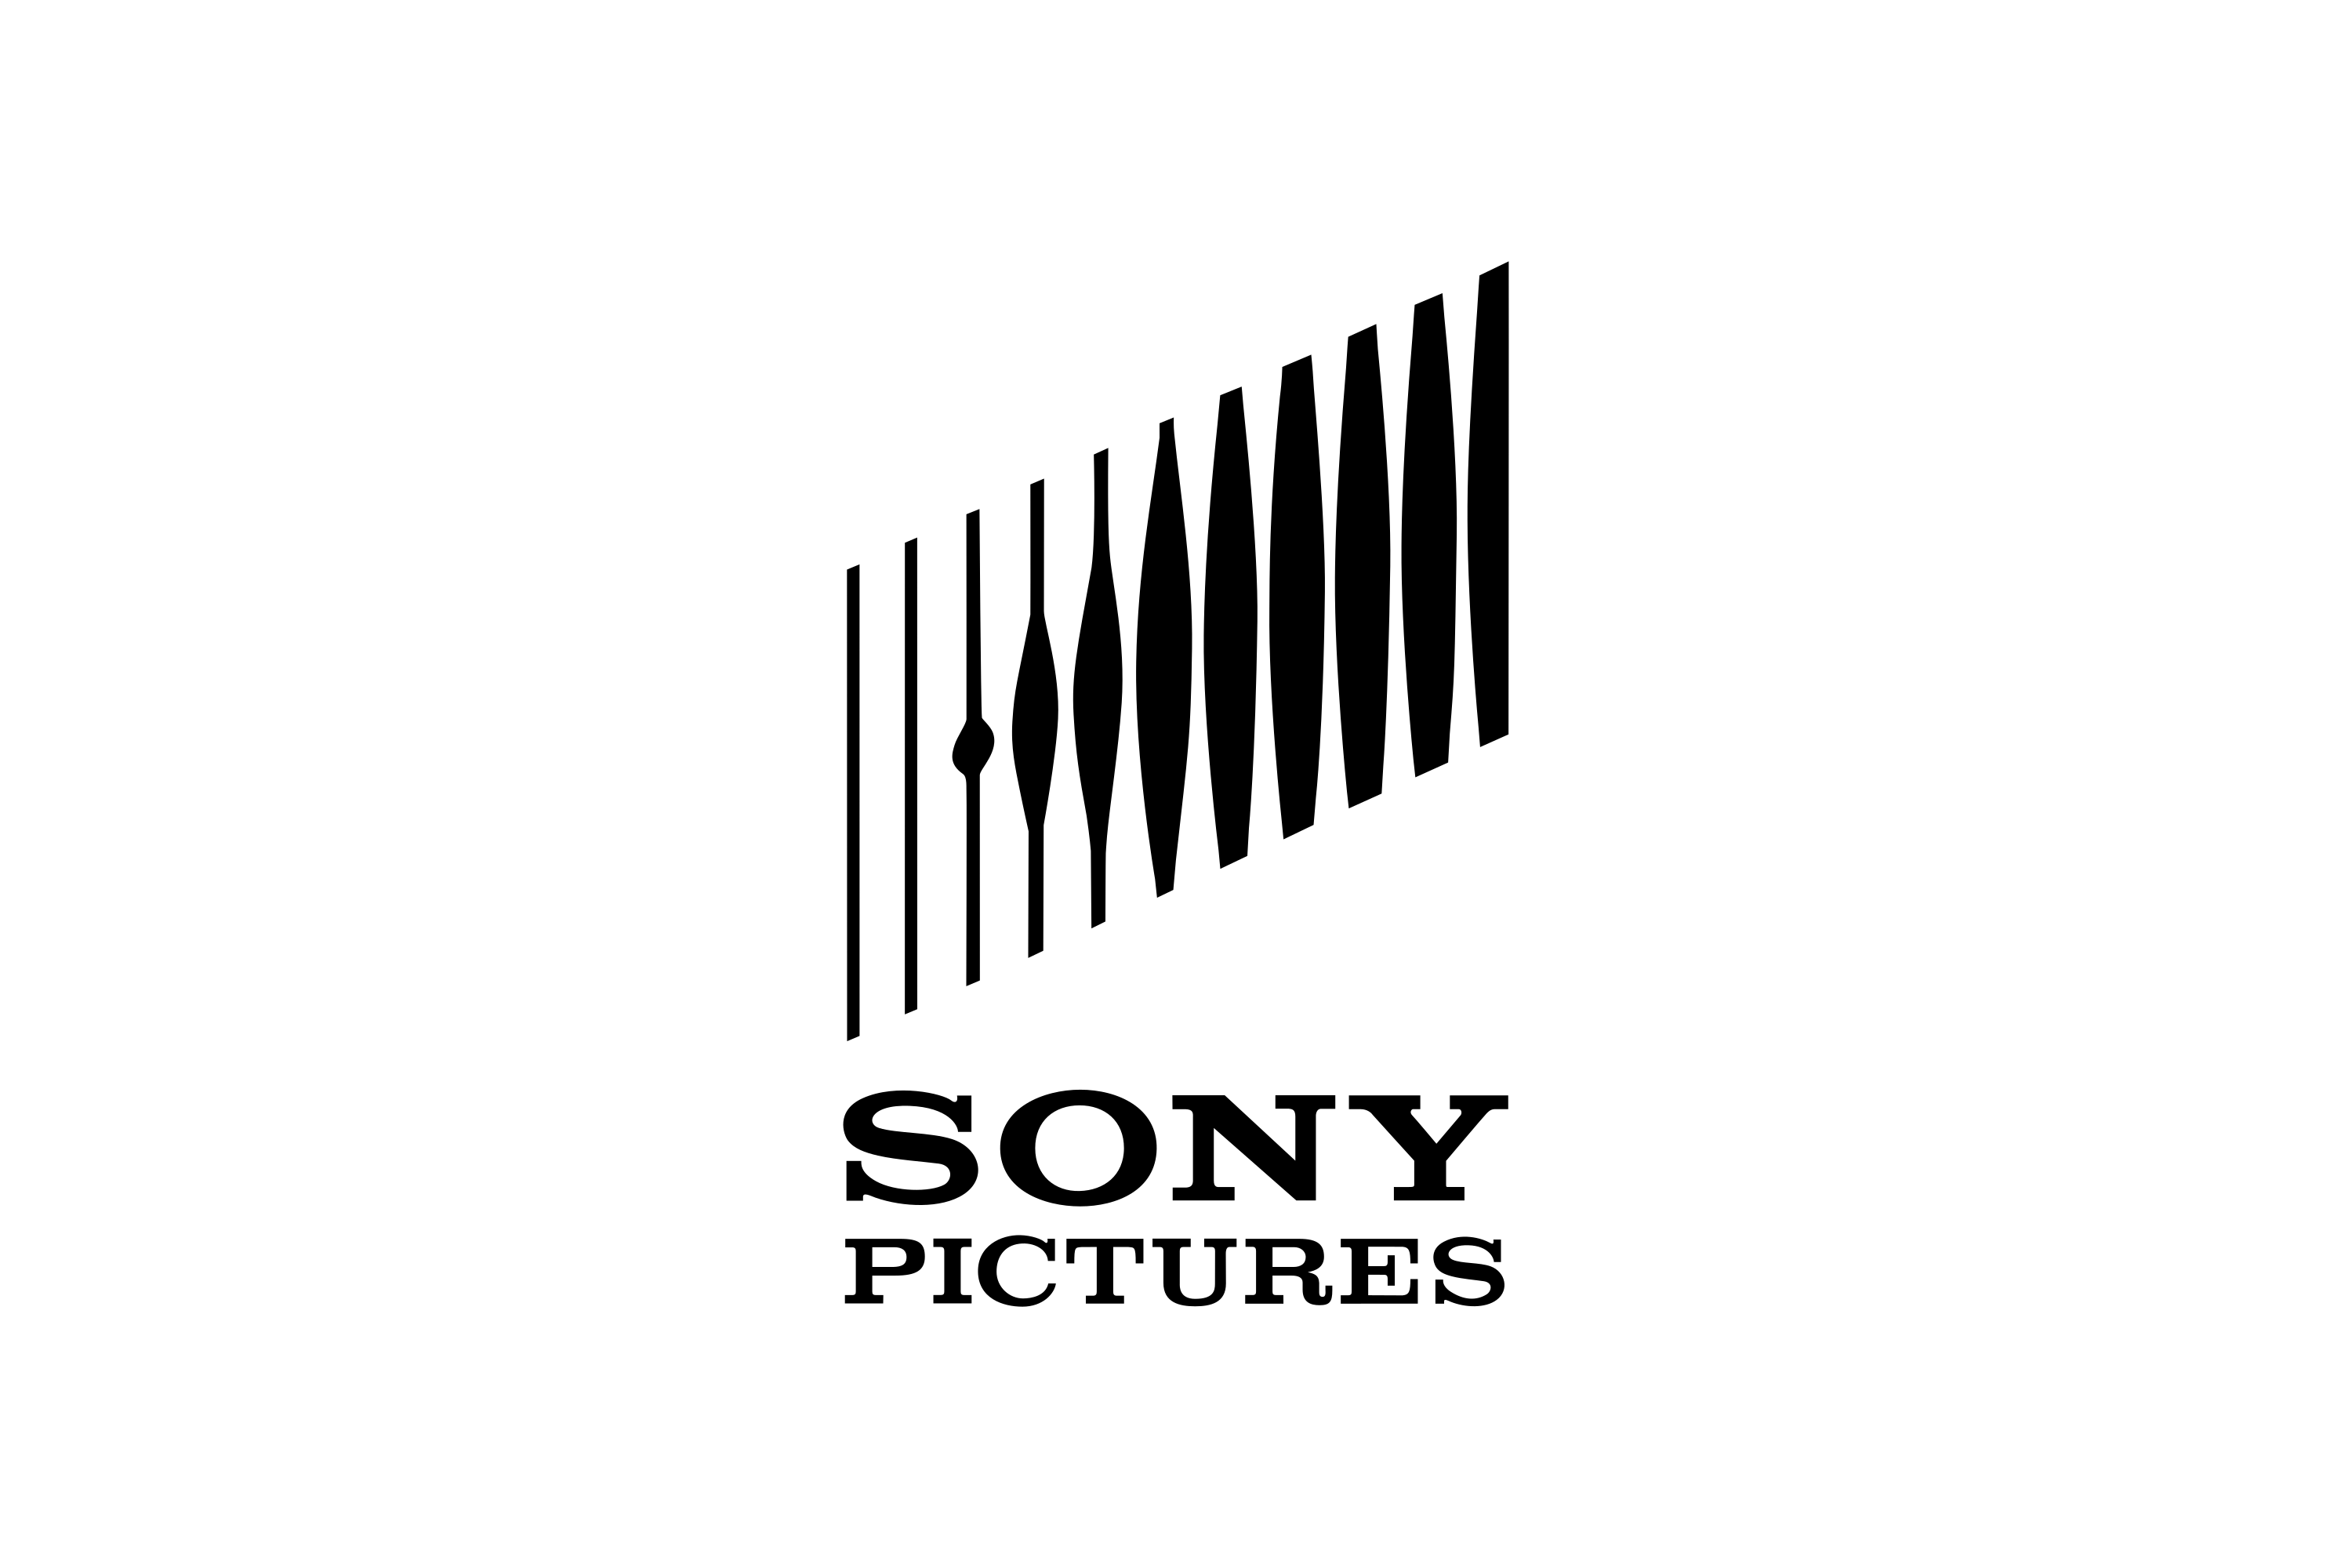 Imagen de clip art de Sony logo